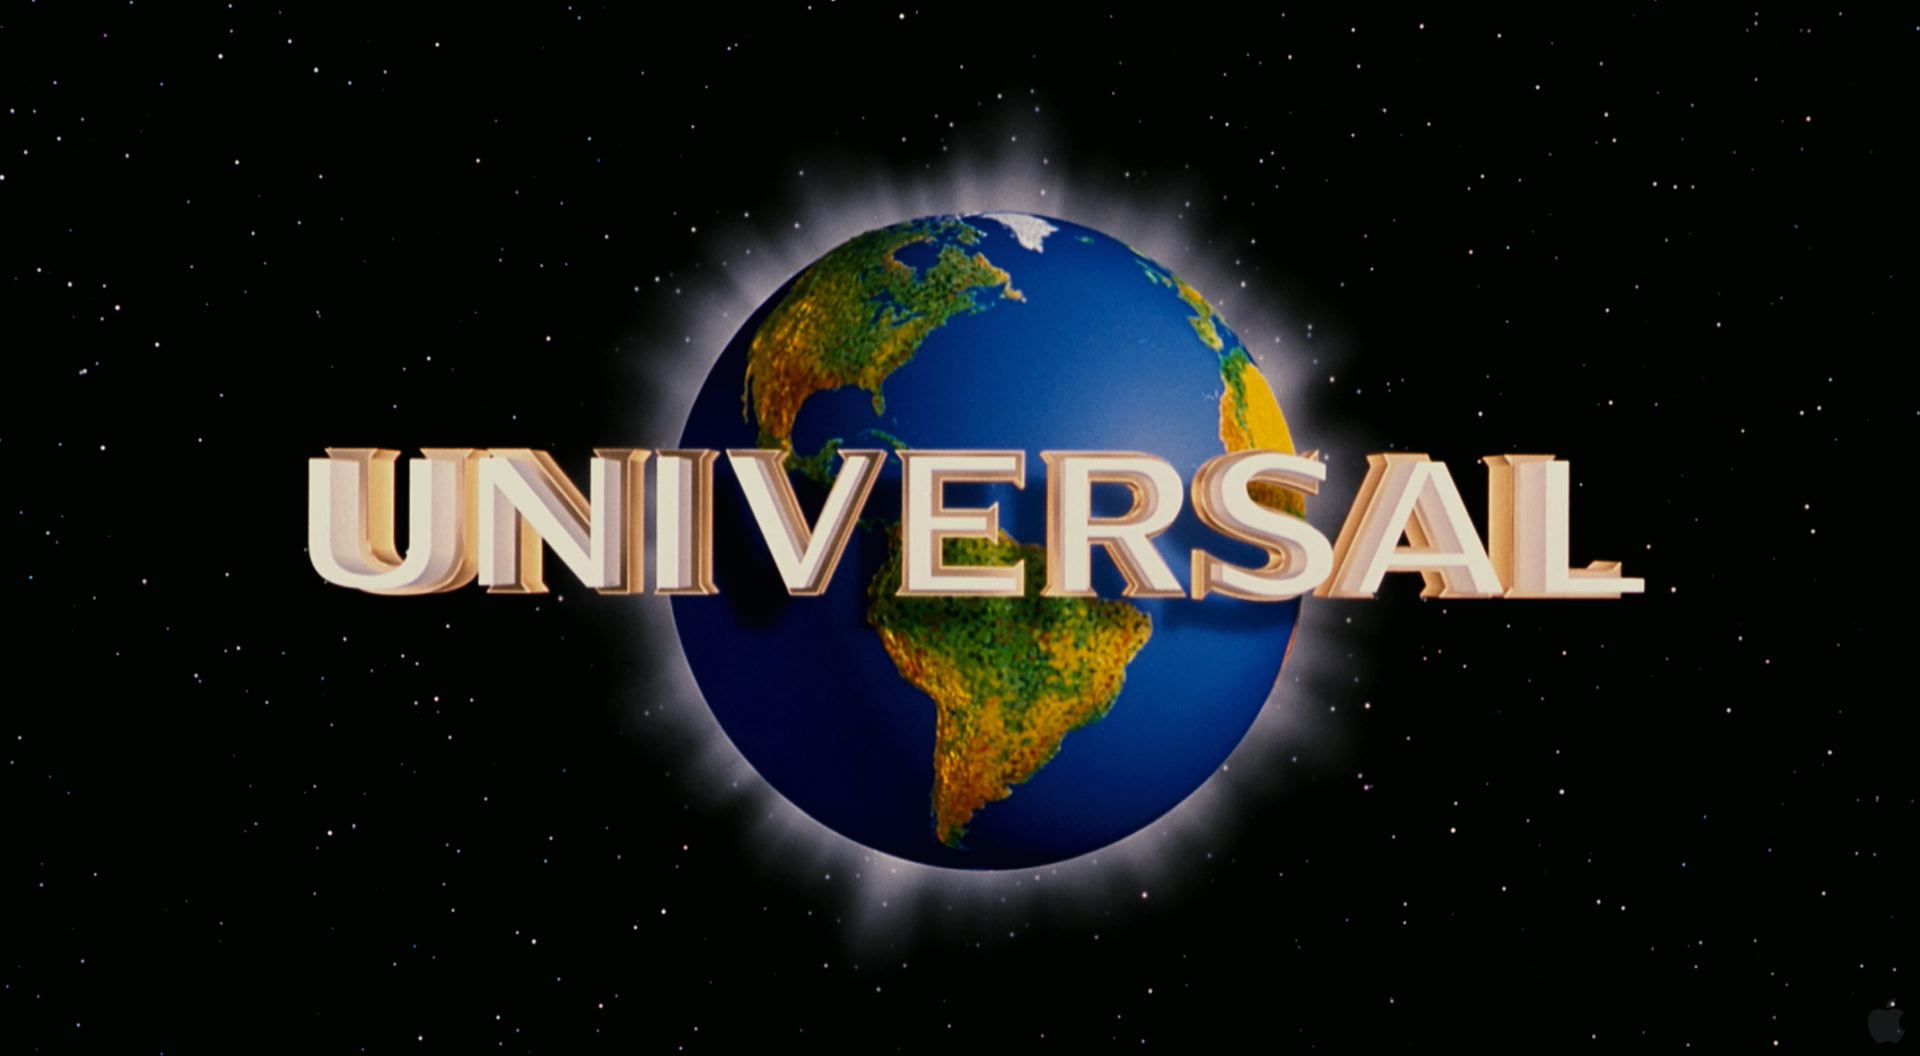 Universal-studios-logo.jpg